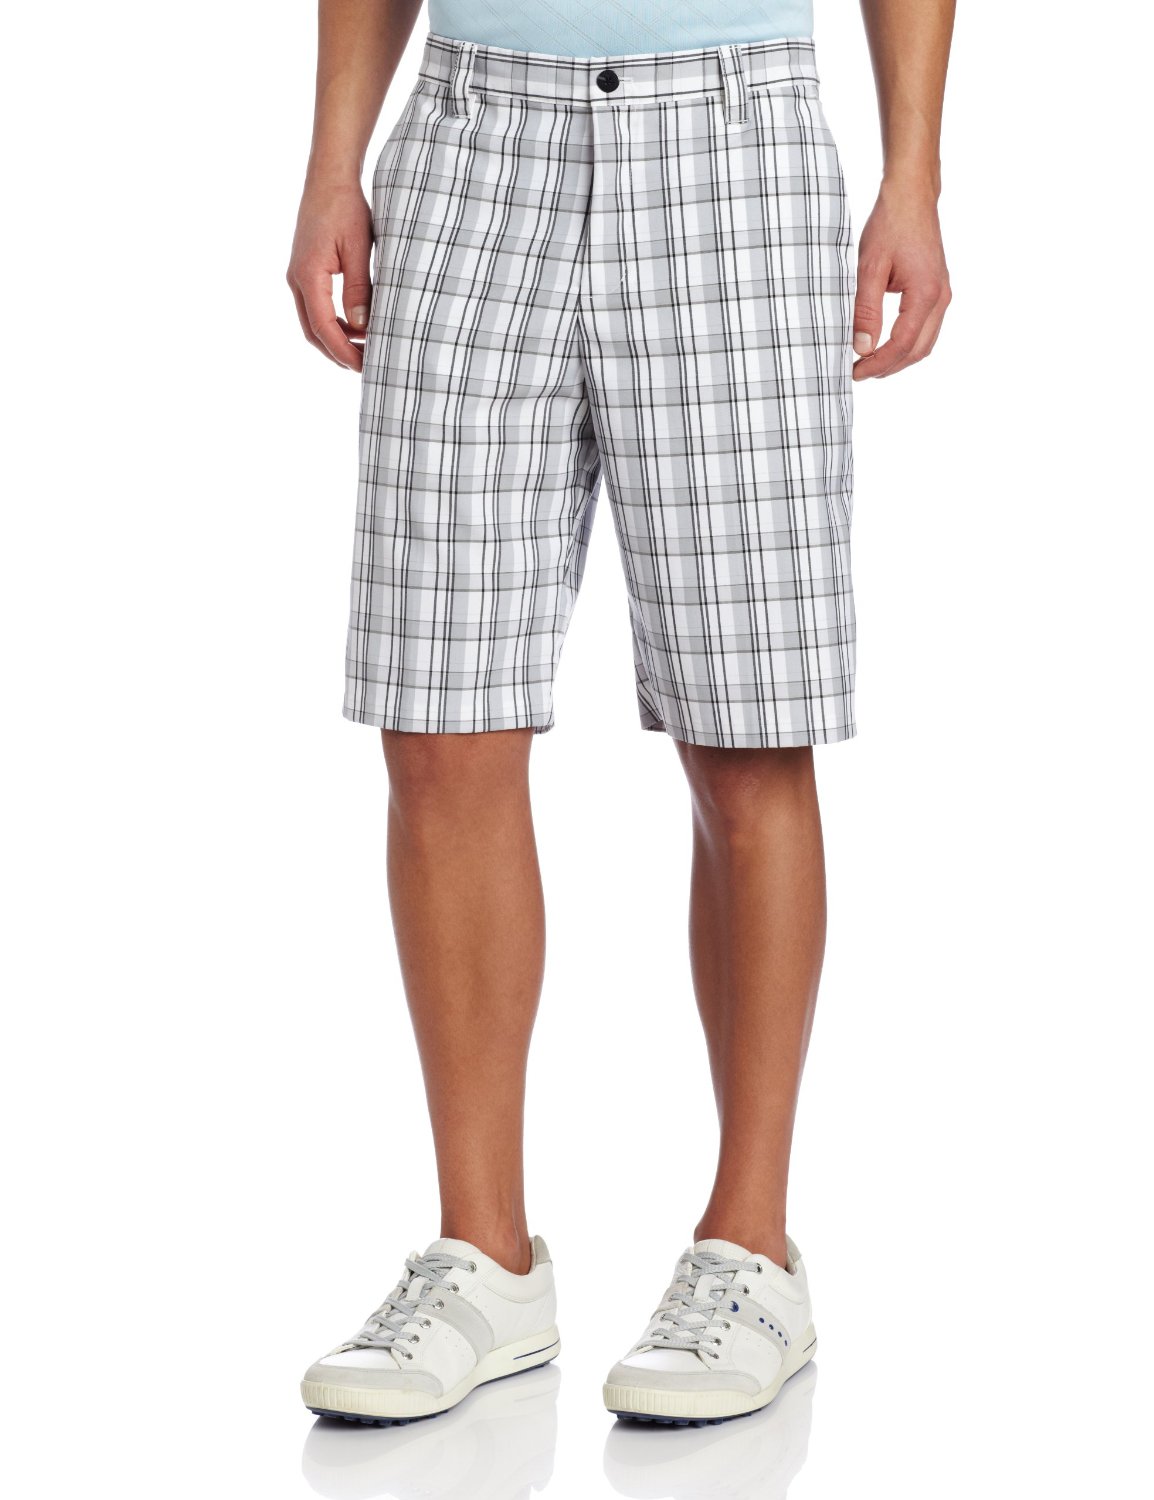 Adidas Mens Climalite Bold Plaid Golf Shorts